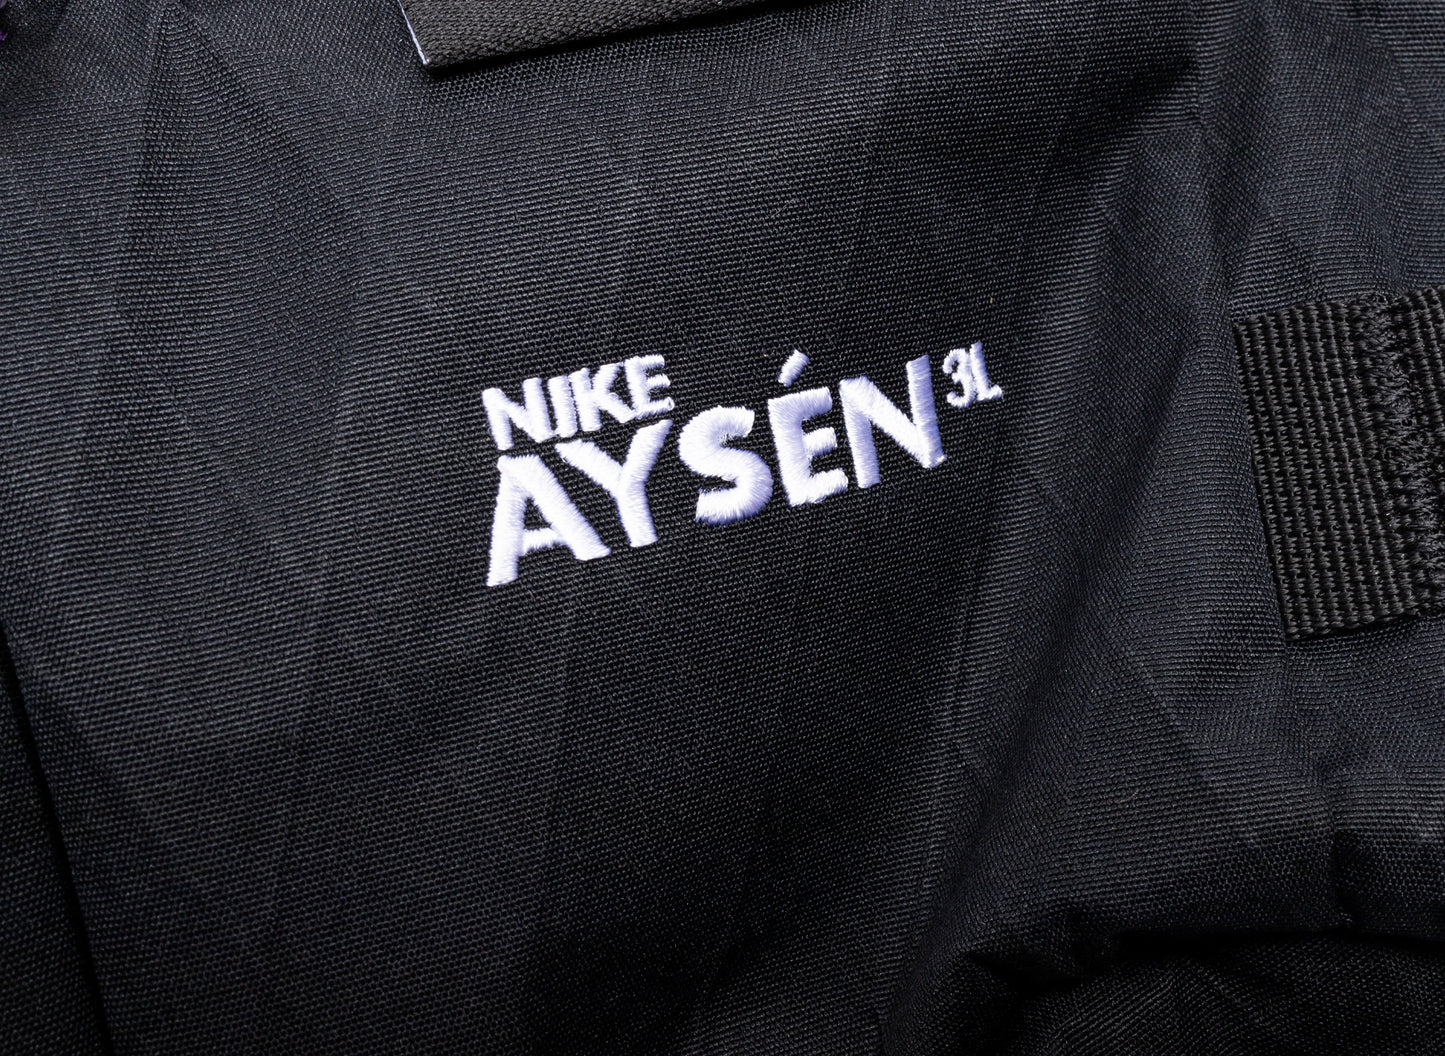 Nike ACG Aysen Waistpack